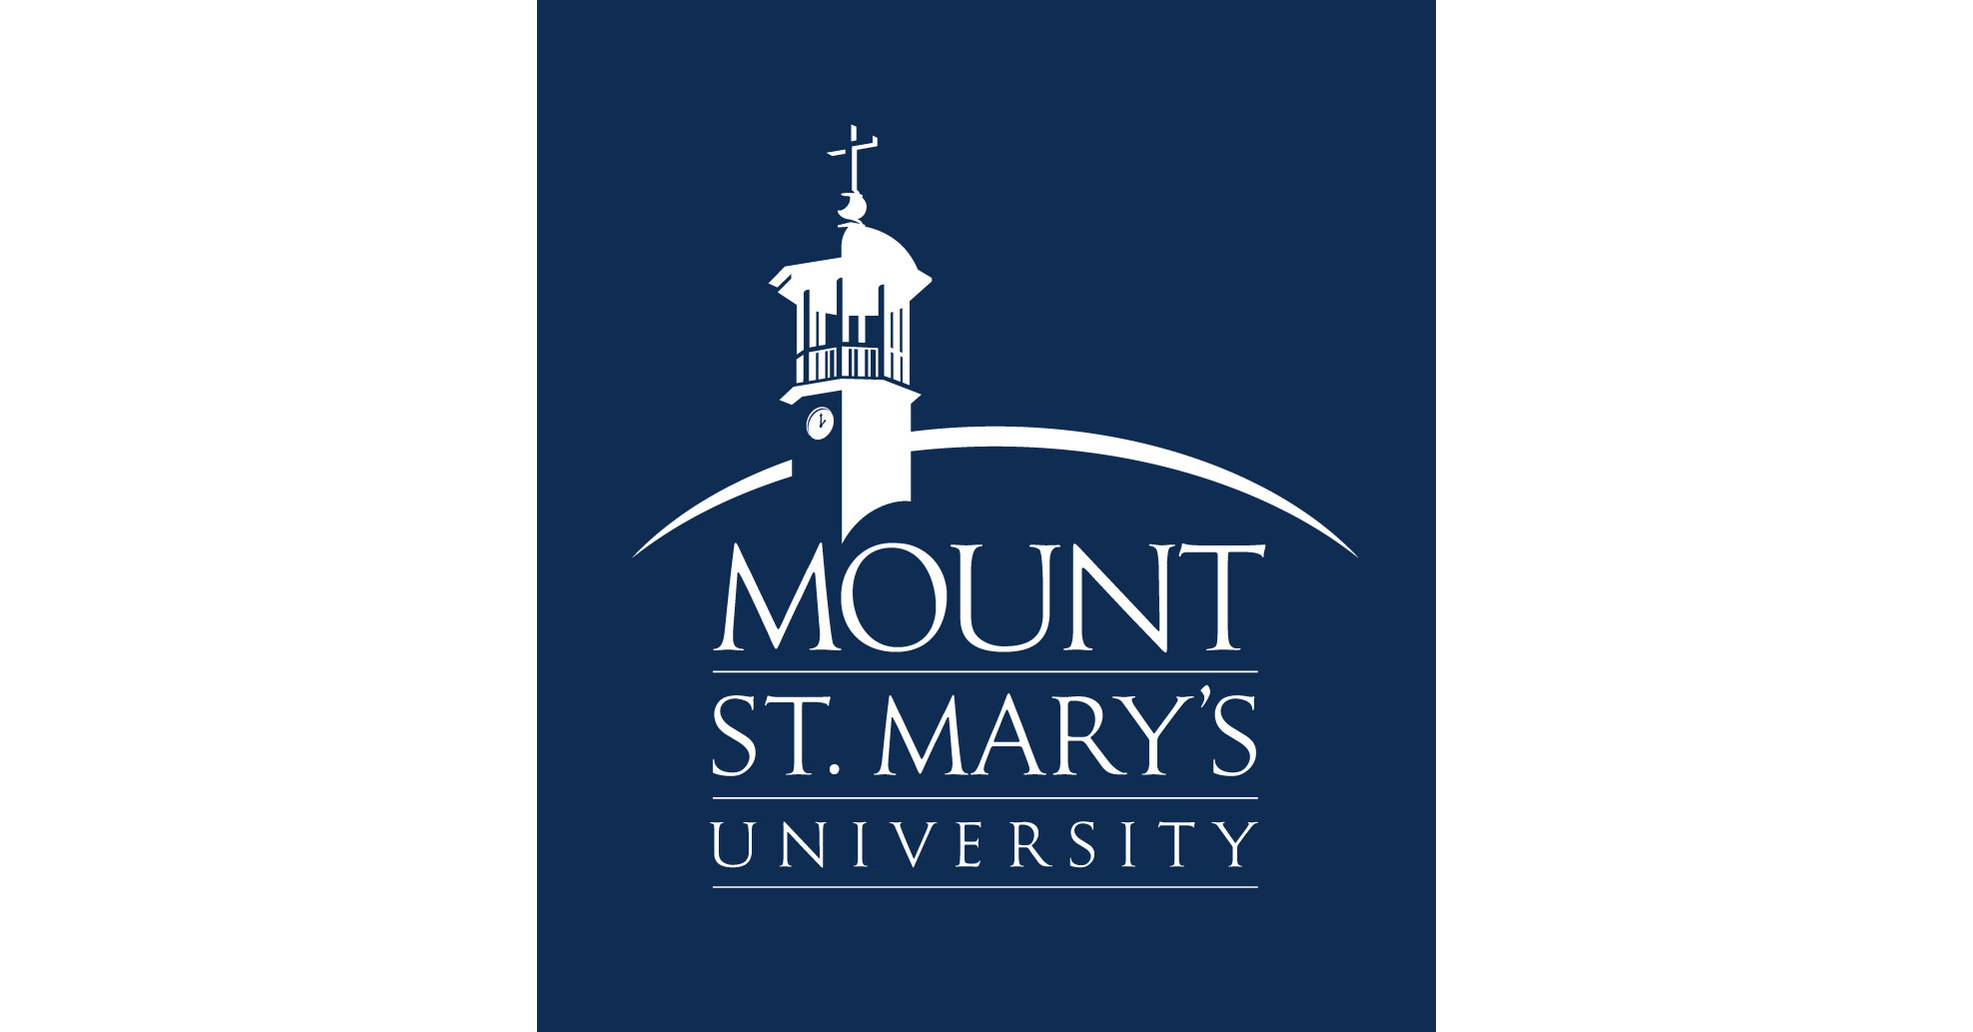 Mount St Mary #39 s University Announces The Palmieri Center for